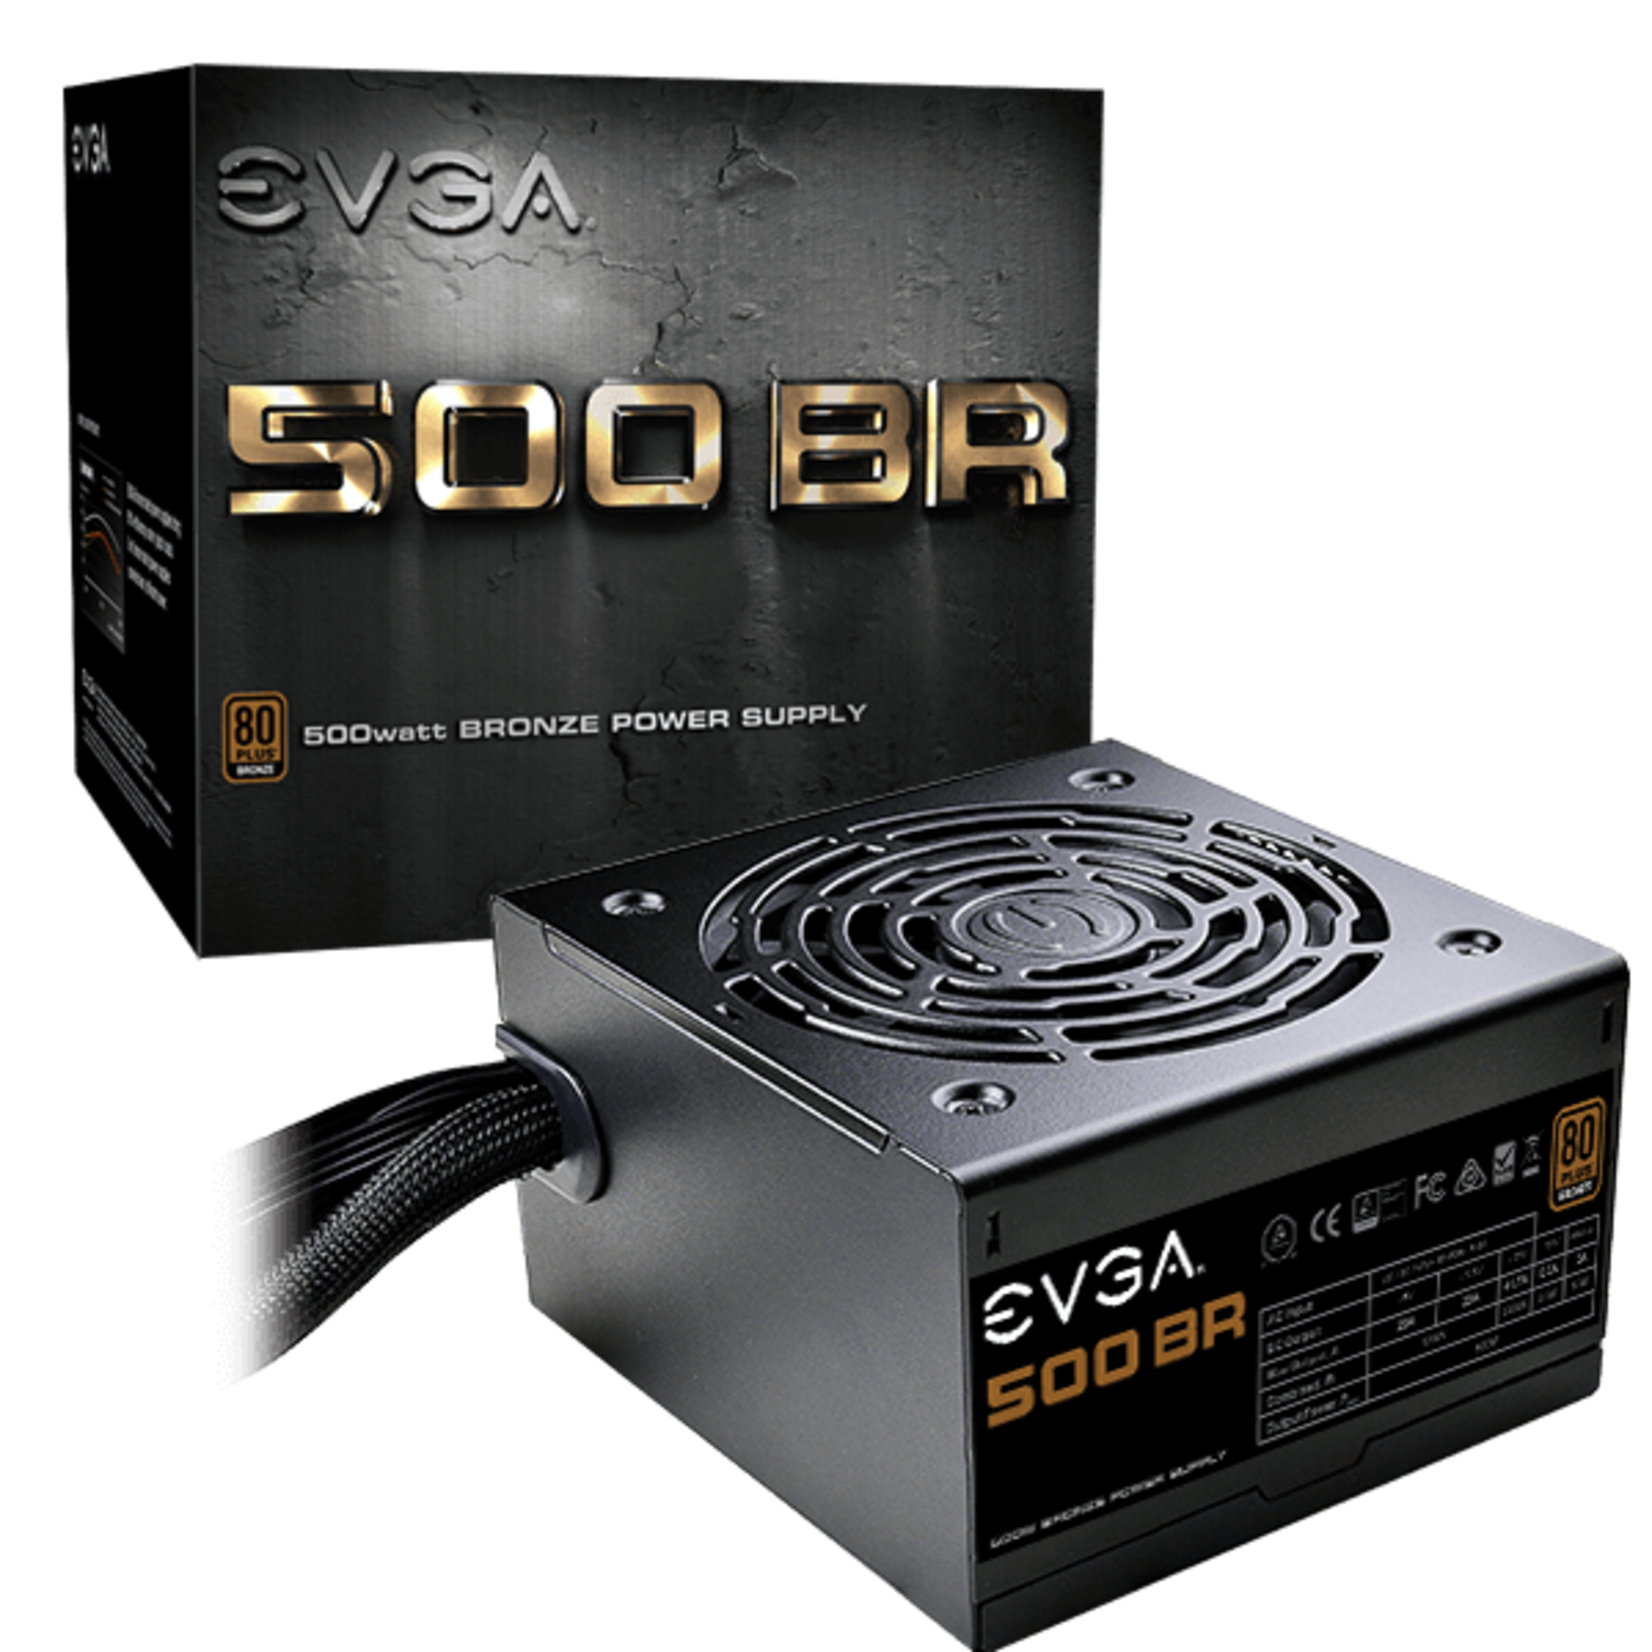 EVGA EVGA Power Supply 100-BR-0500-K1 500 BR 500W 80+BRONZE 12V PCI Express 120mm Long SleeveBearing